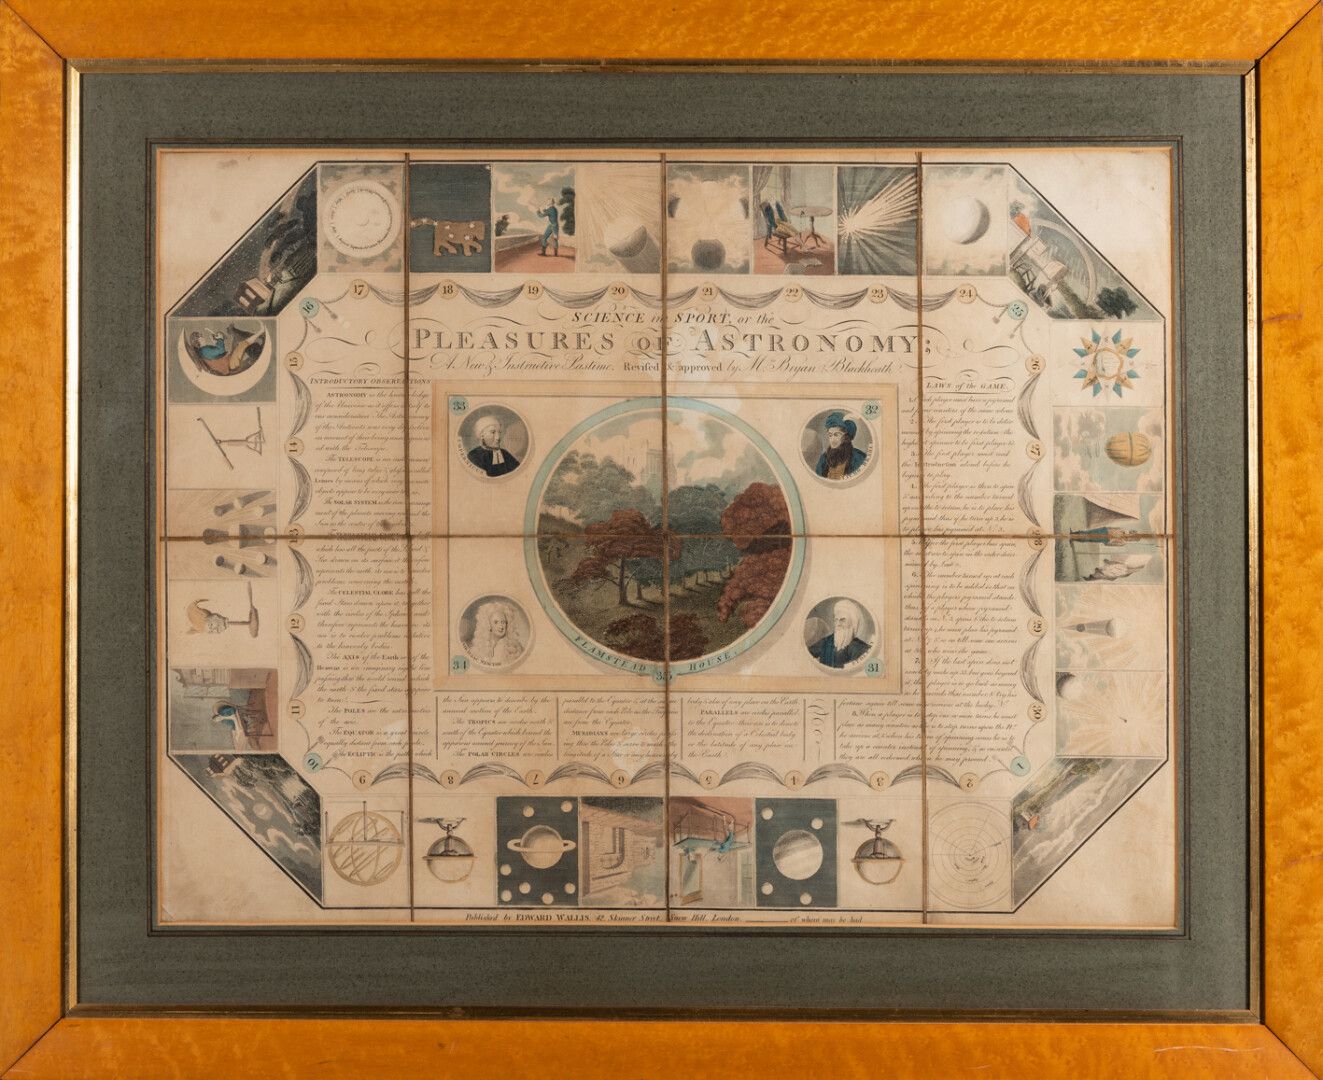 Null 运动中的科学或天文学的乐趣

罕见的棋盘游戏，由John Wallis在1805年创造，并得到Blackheath的Bryan夫人的认可，由8张装订好&hellip;